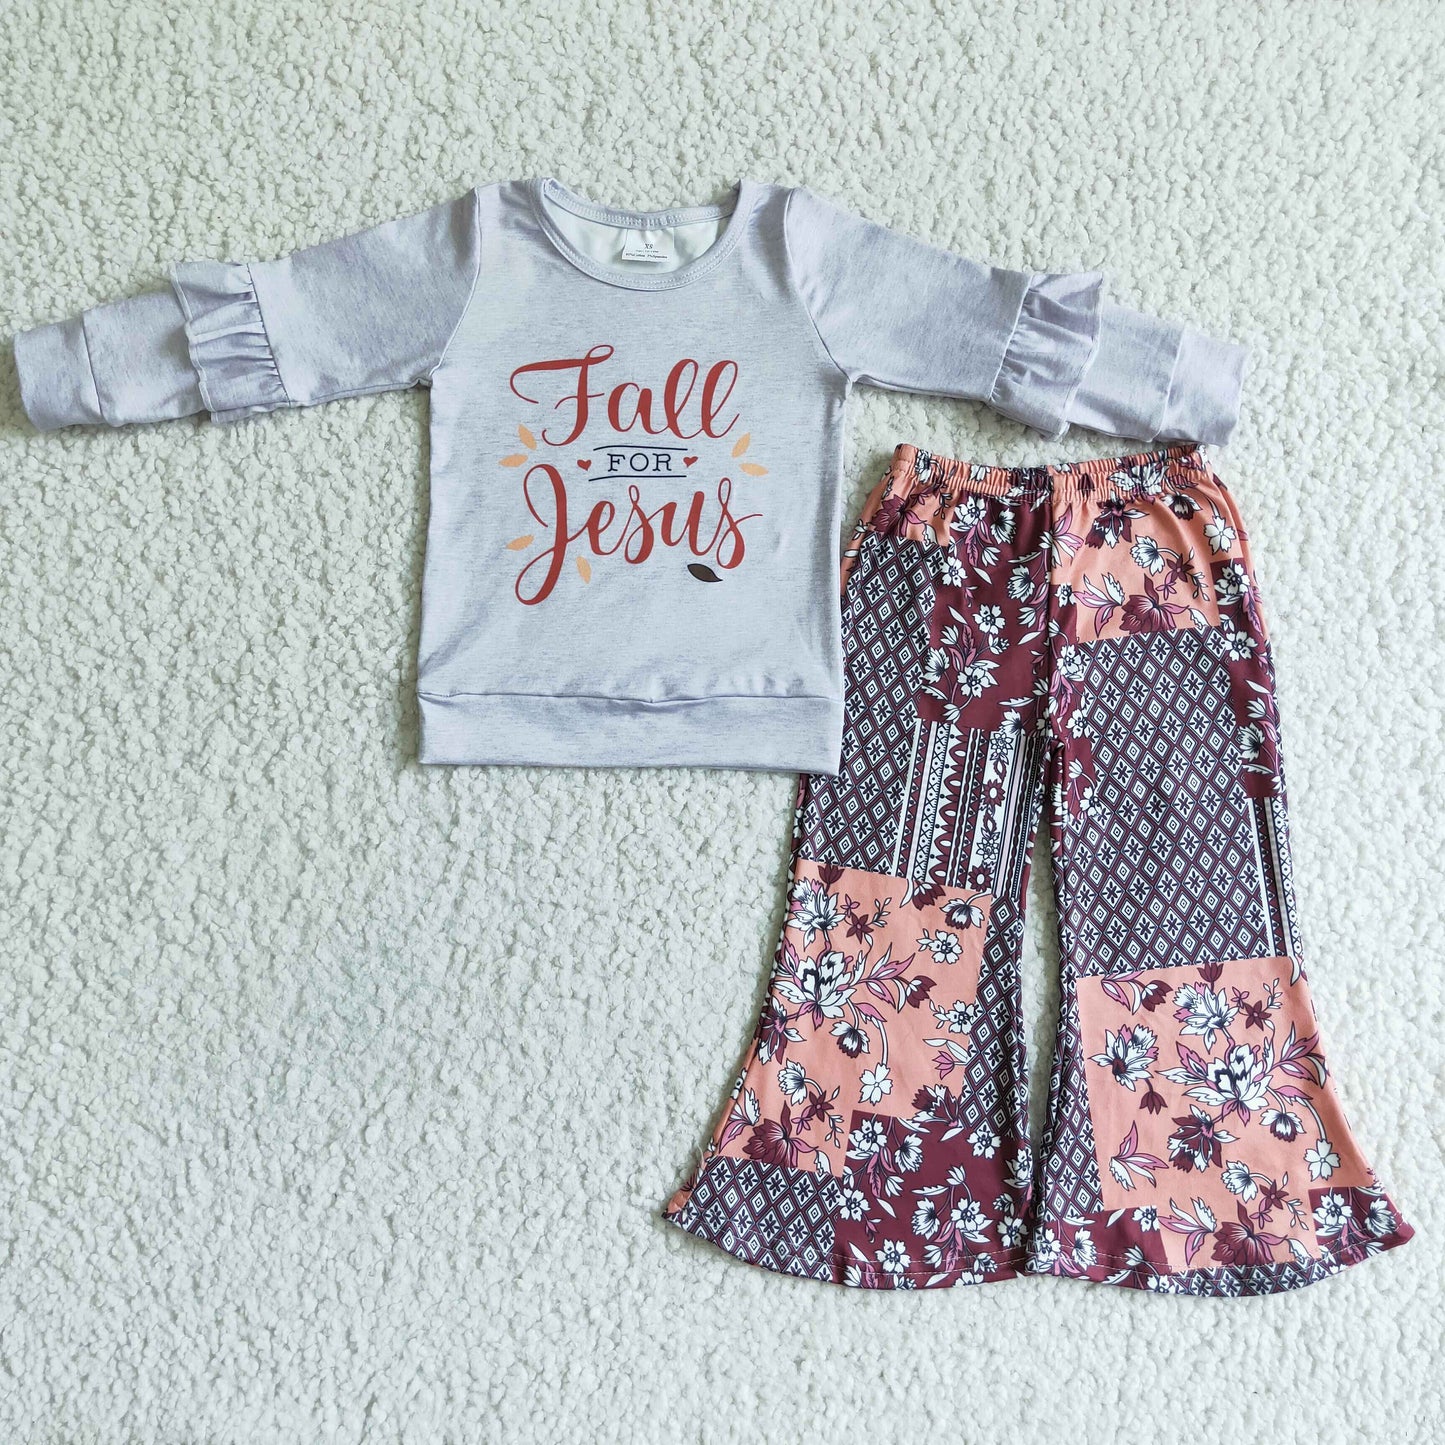 Fall for jesus shirt patchwork pants girls clothing set